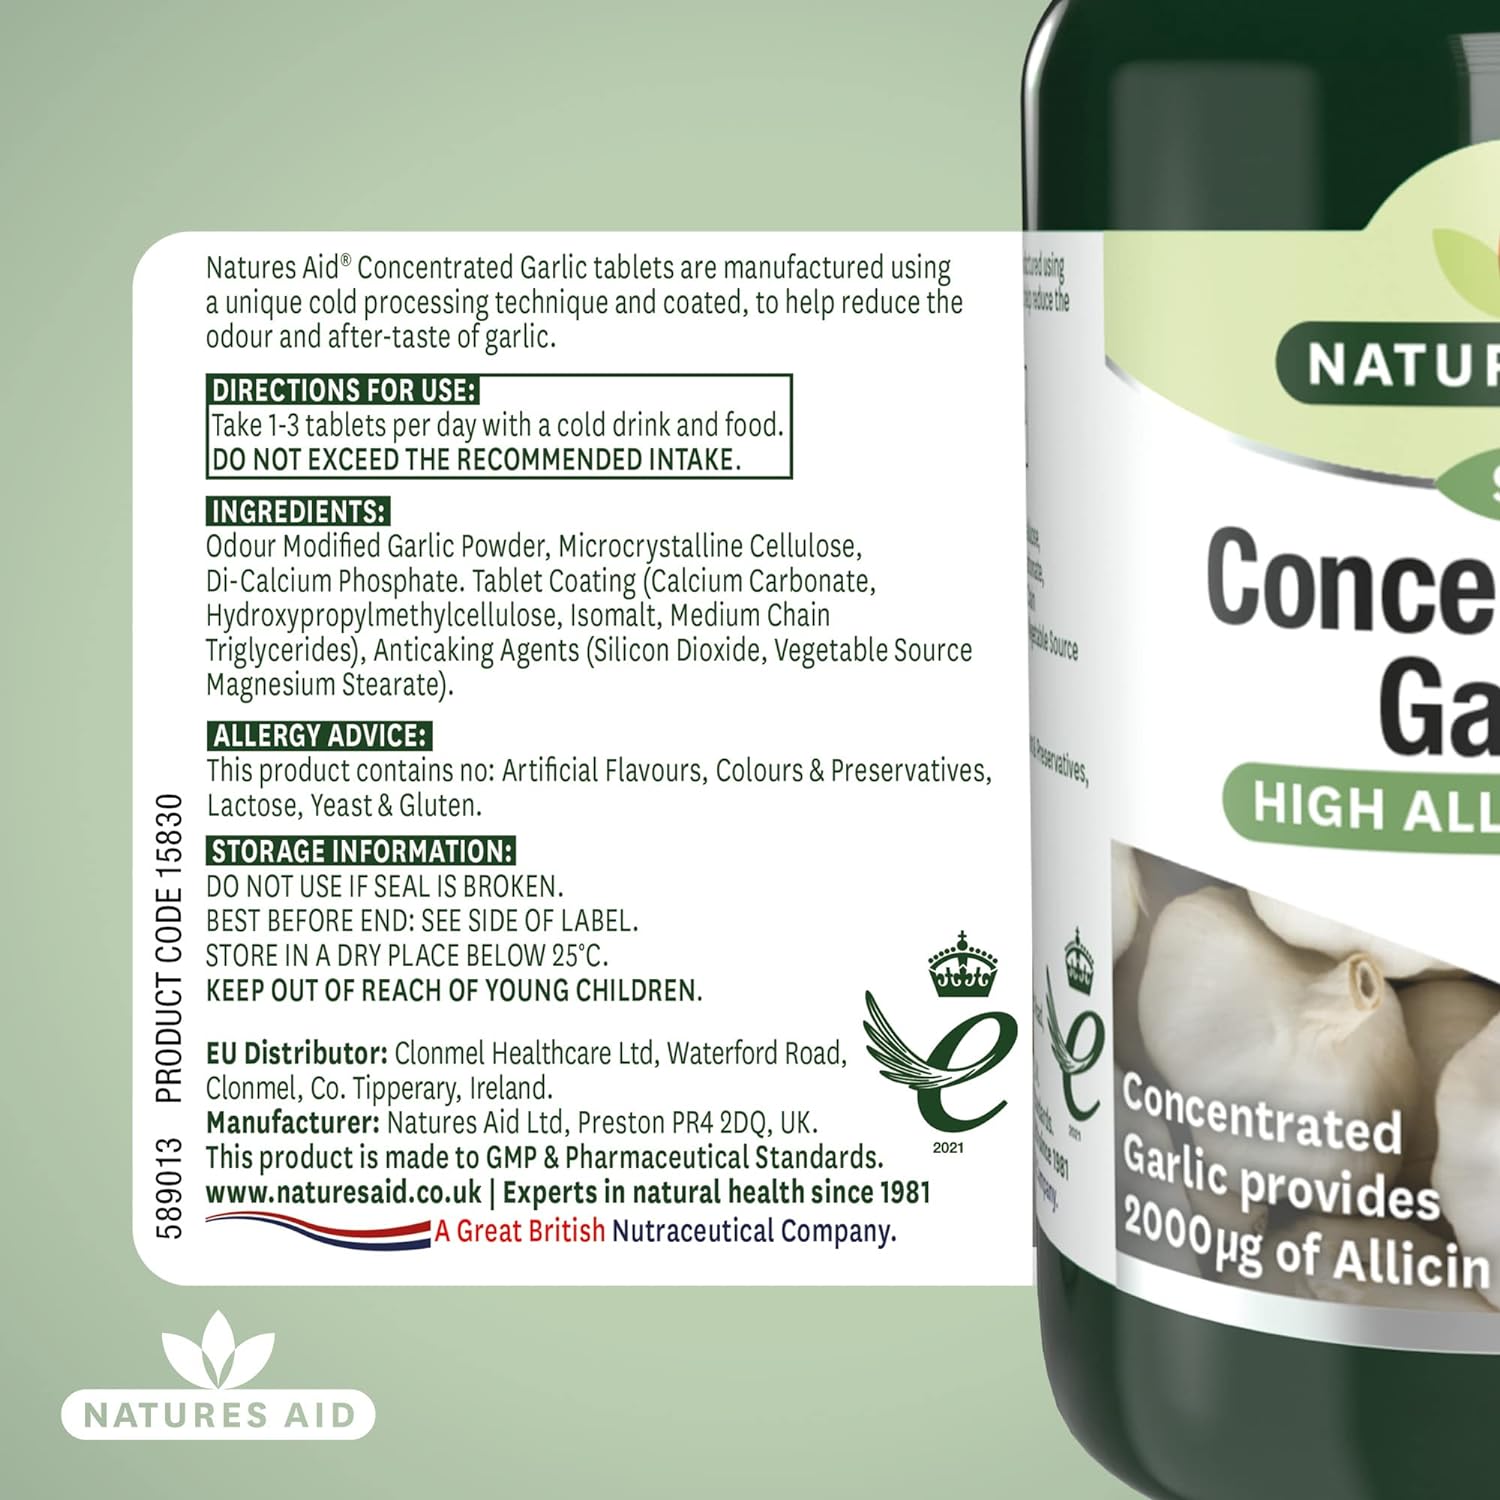 Garlic Concentrated 2000ug Allicin 90 Tablets